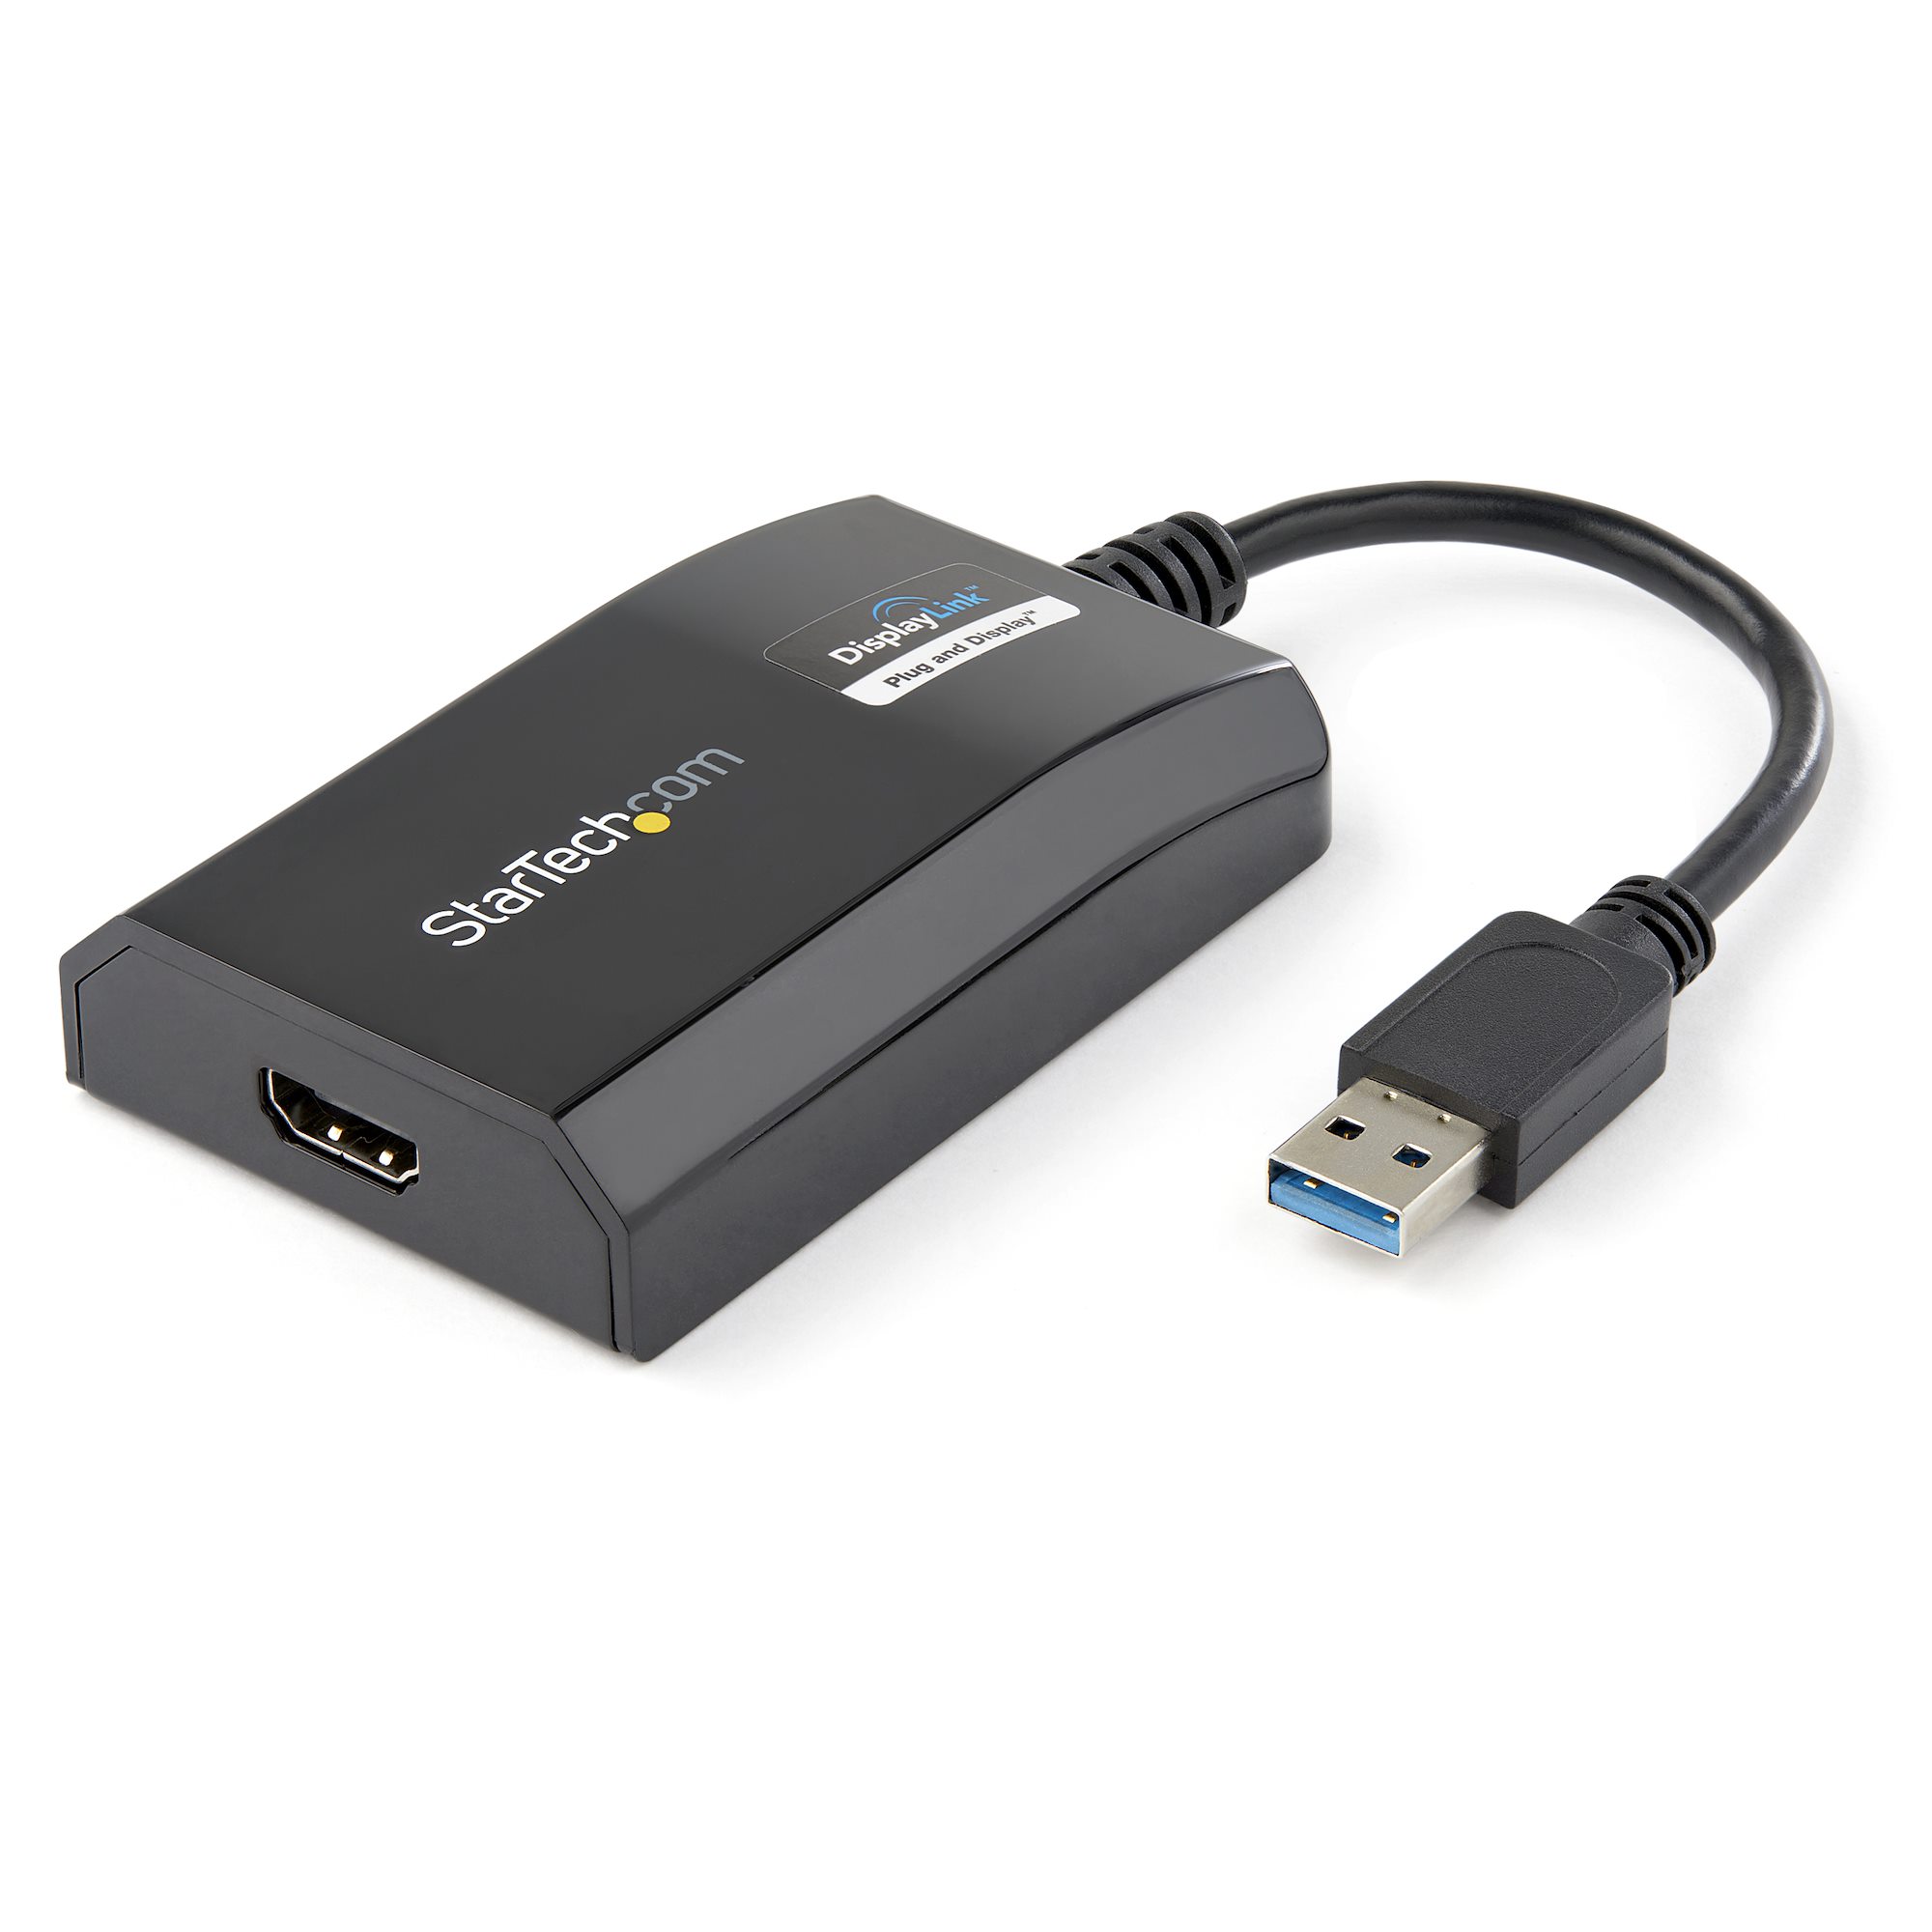 【USB32HDPRO】USB 3.0 TO HDMI EXTERNAL MULTI M